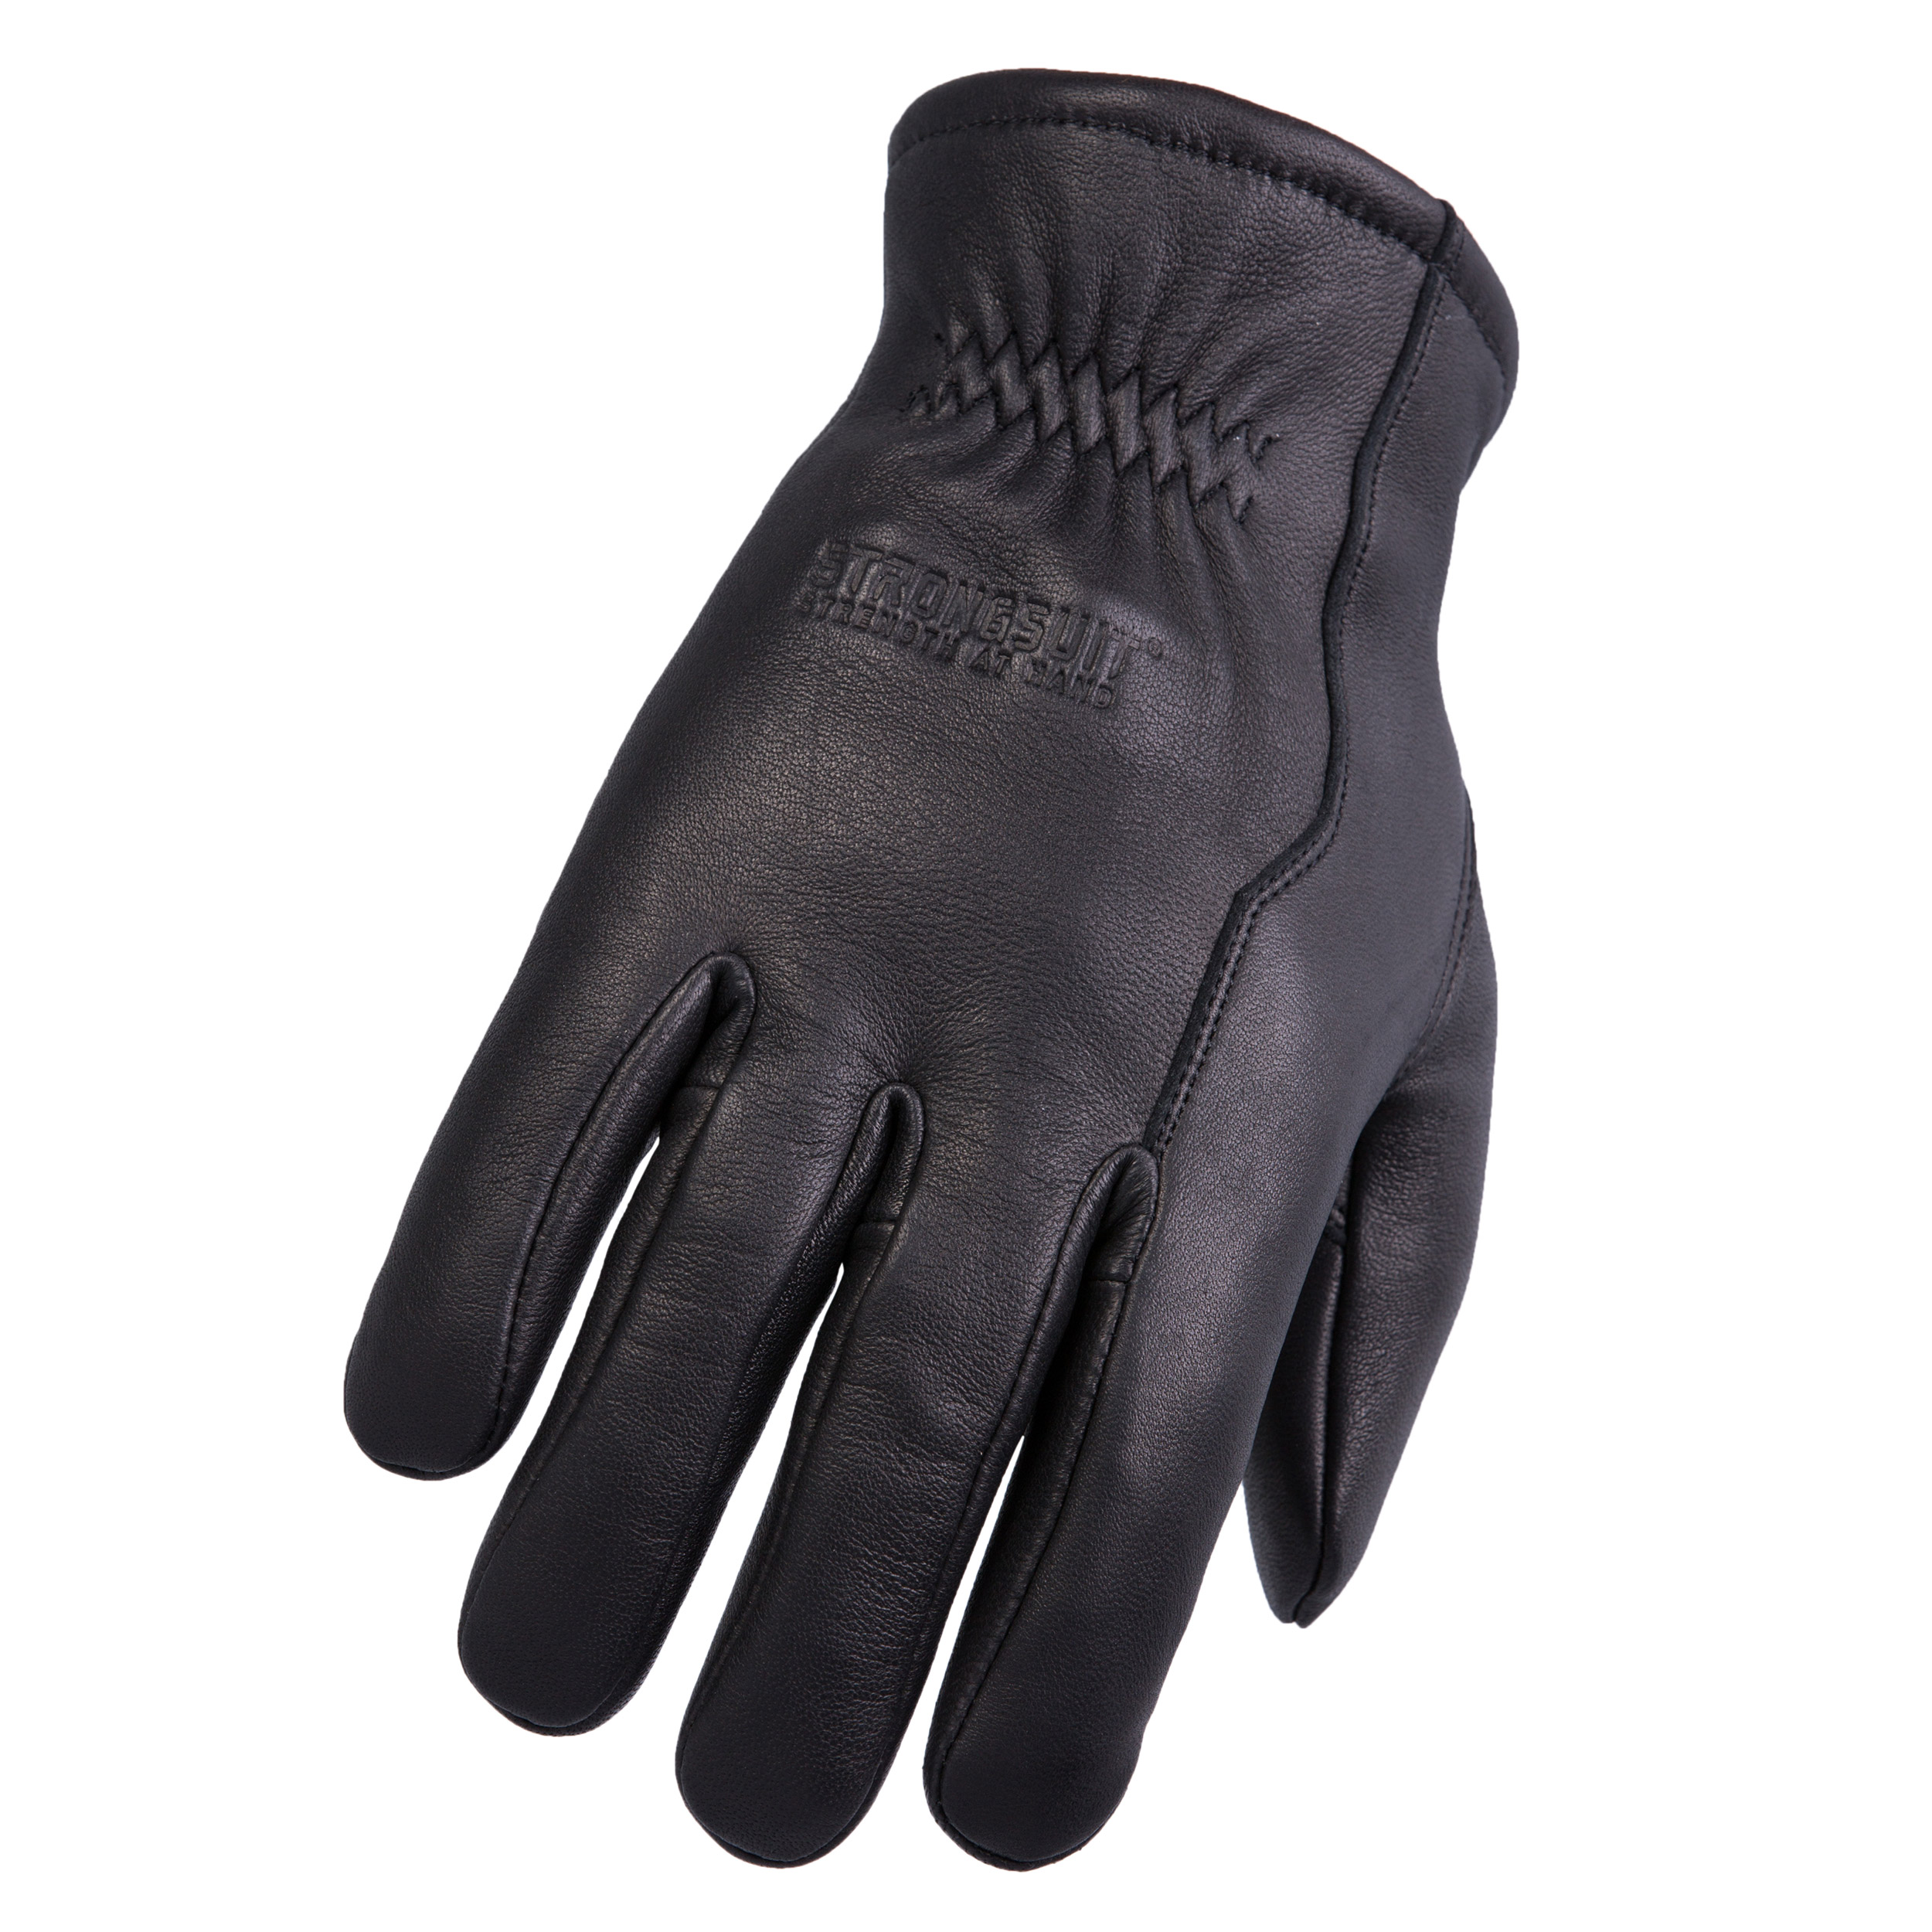 Weathermaster Gloves Large